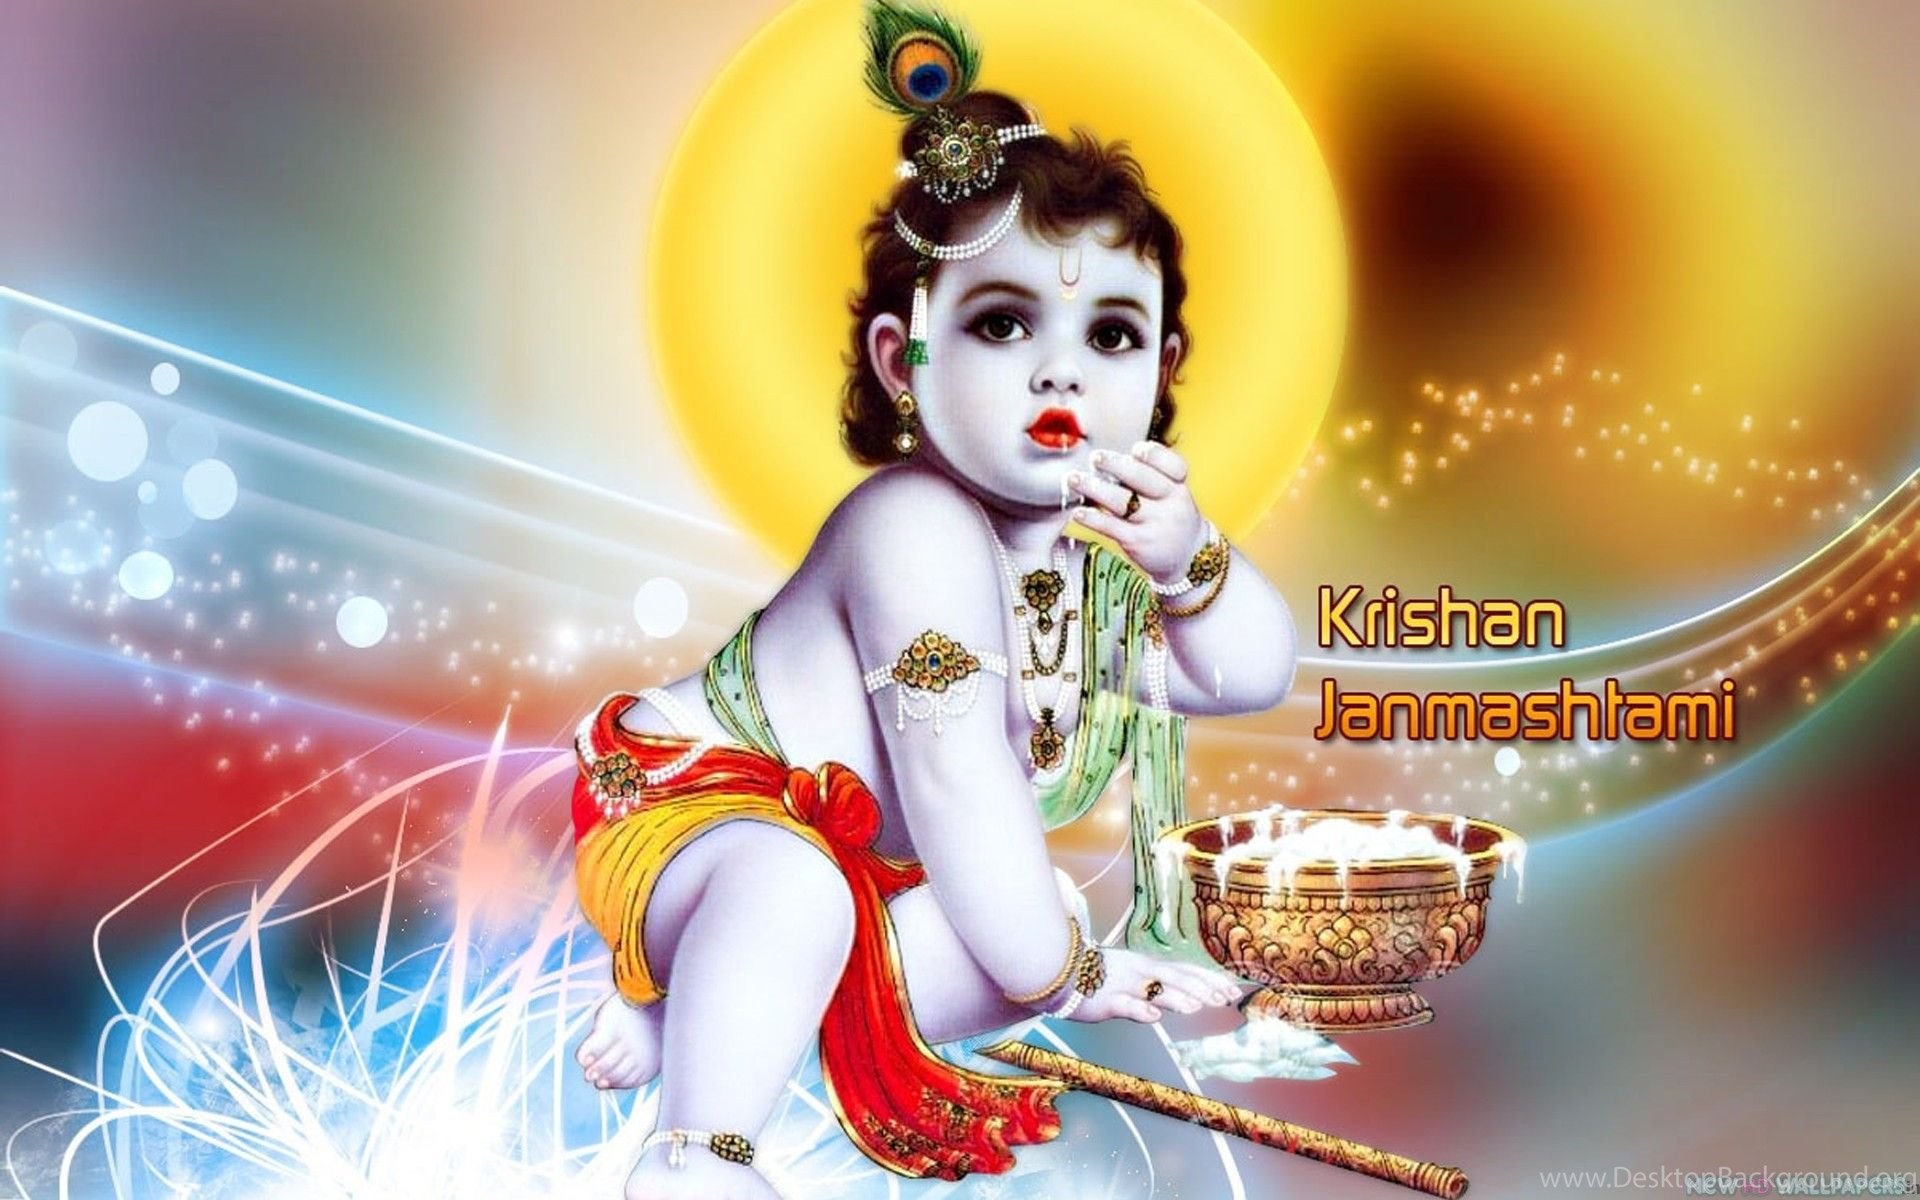 Lord Krishna HD Wallpaper, Cute Bal Krishna Image Free Desktop Background